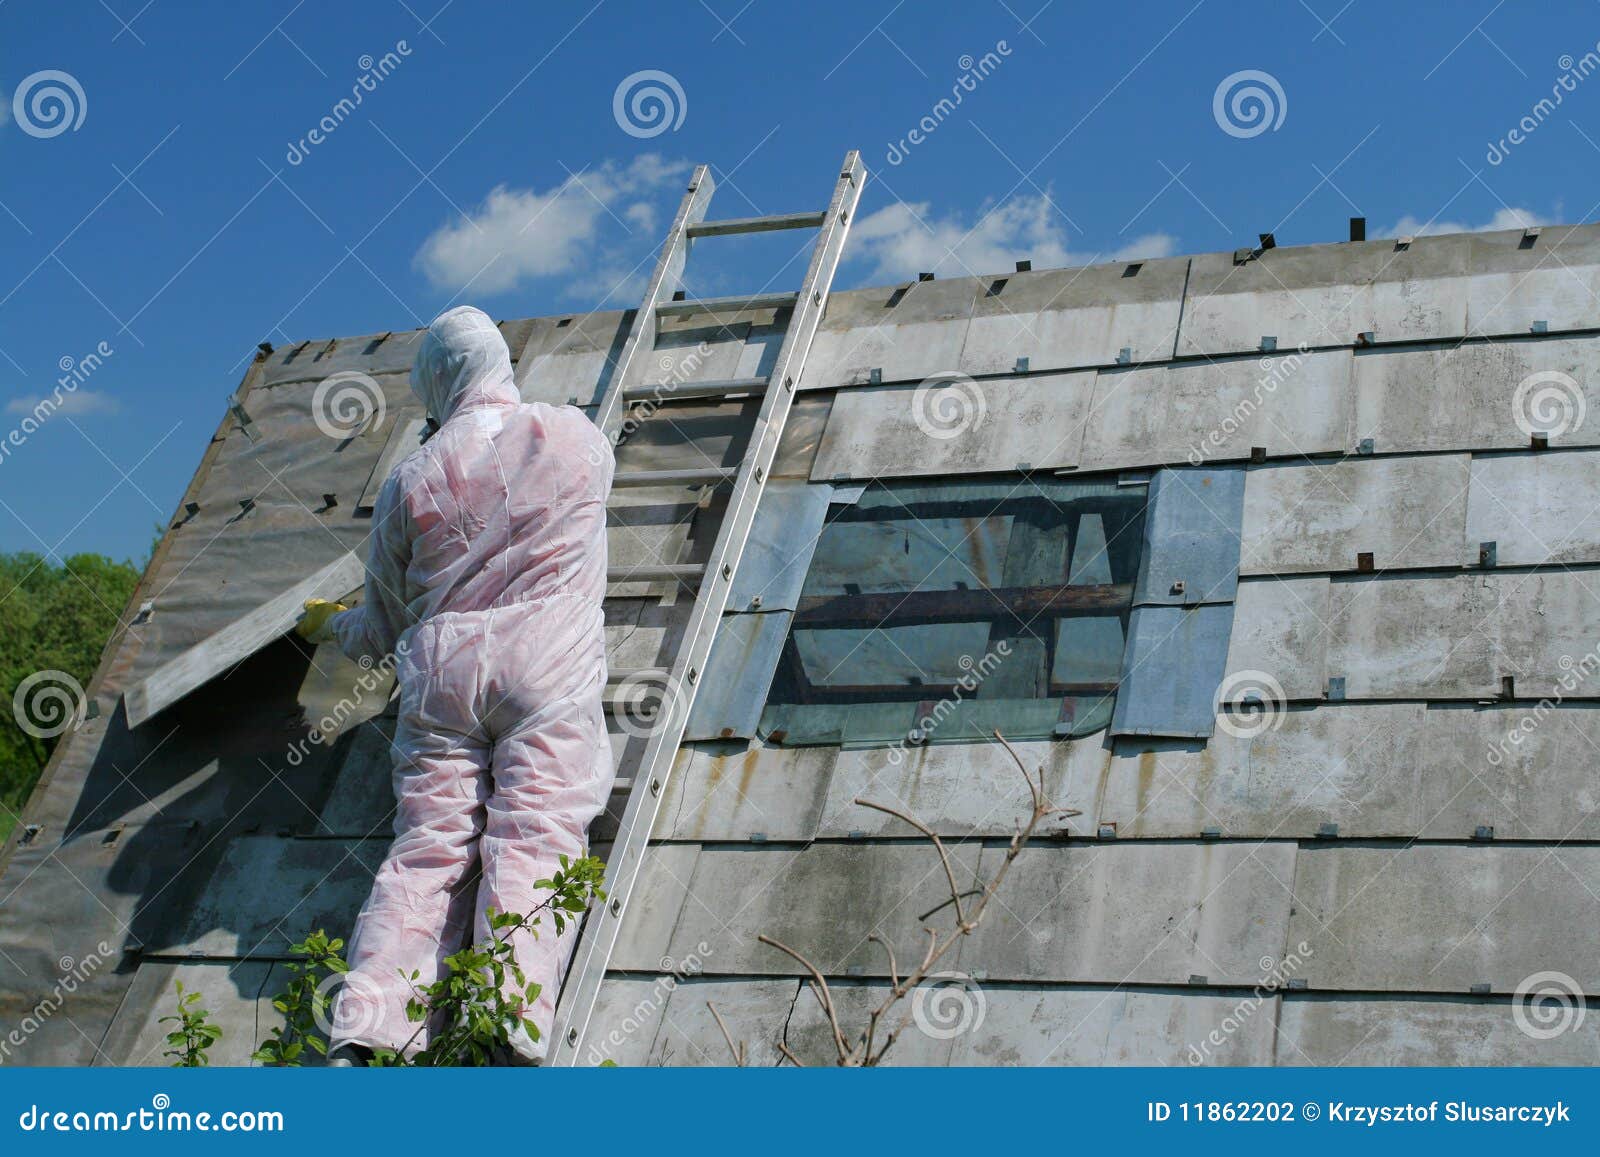 asbestos removal worker